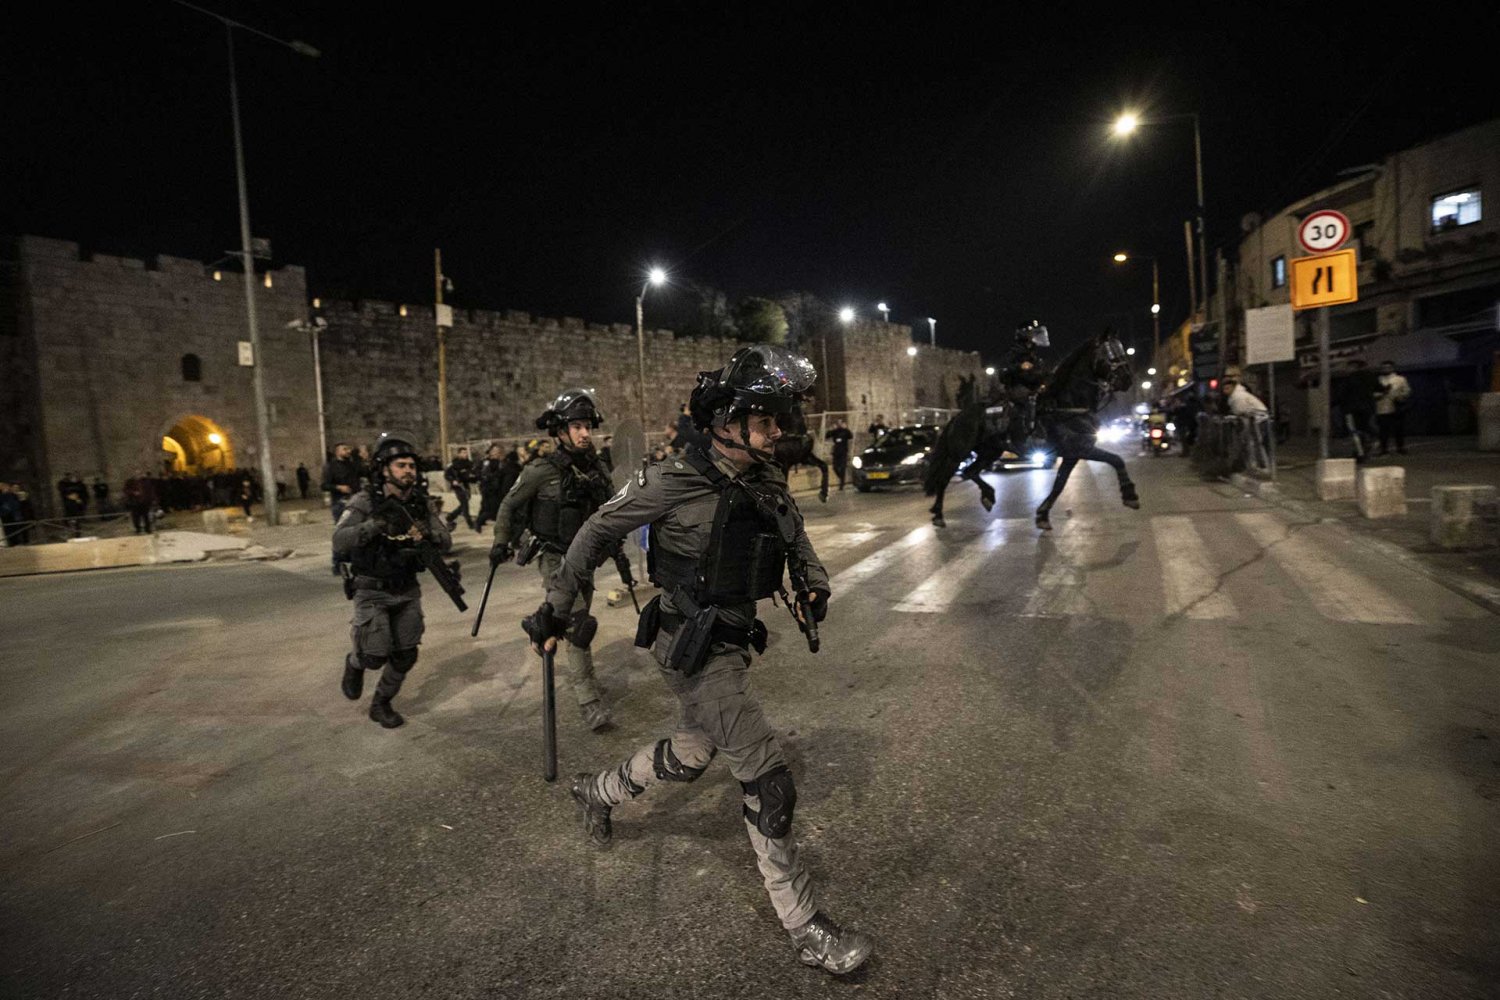 Israeli police violently break up a Palestinian celebration of Morocco's World Cup success held at Jerusalem's Damascus Gate